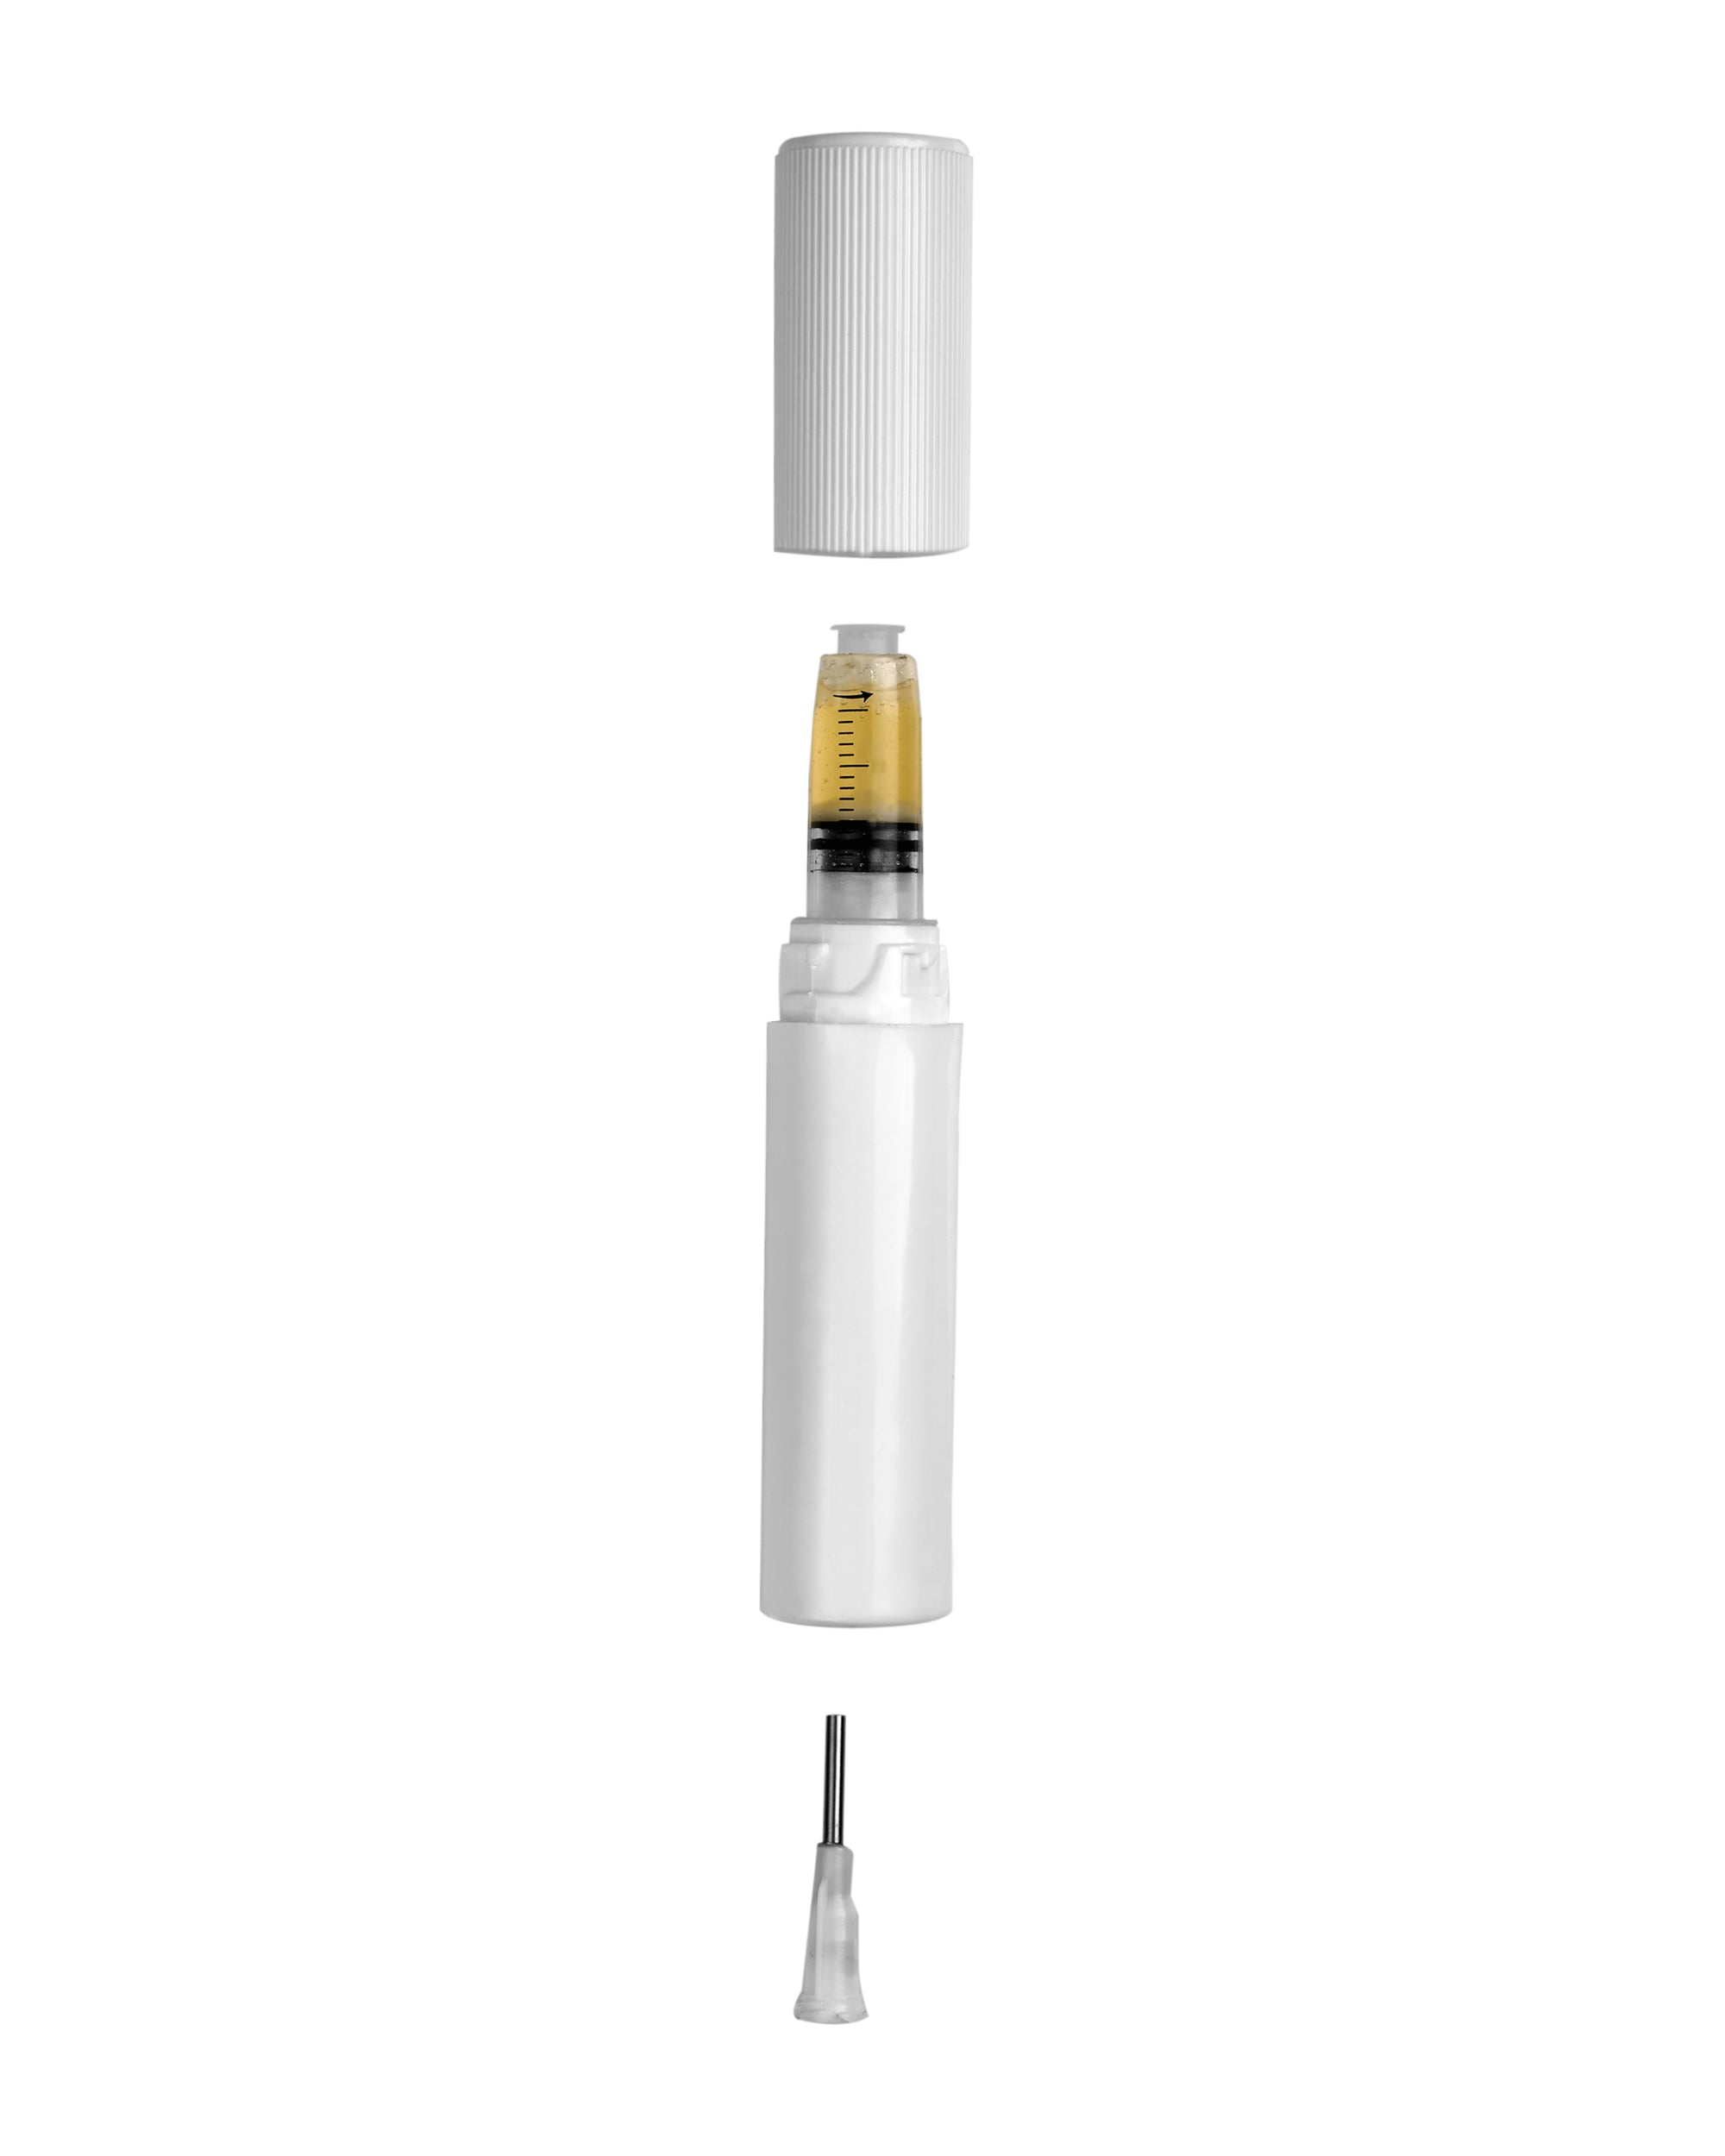 Child Resistant & Luer Lock | DymaPak Twistspenser White Plastic Dab Applicator Syringes | 1mL - 0.33mL Increments - 1